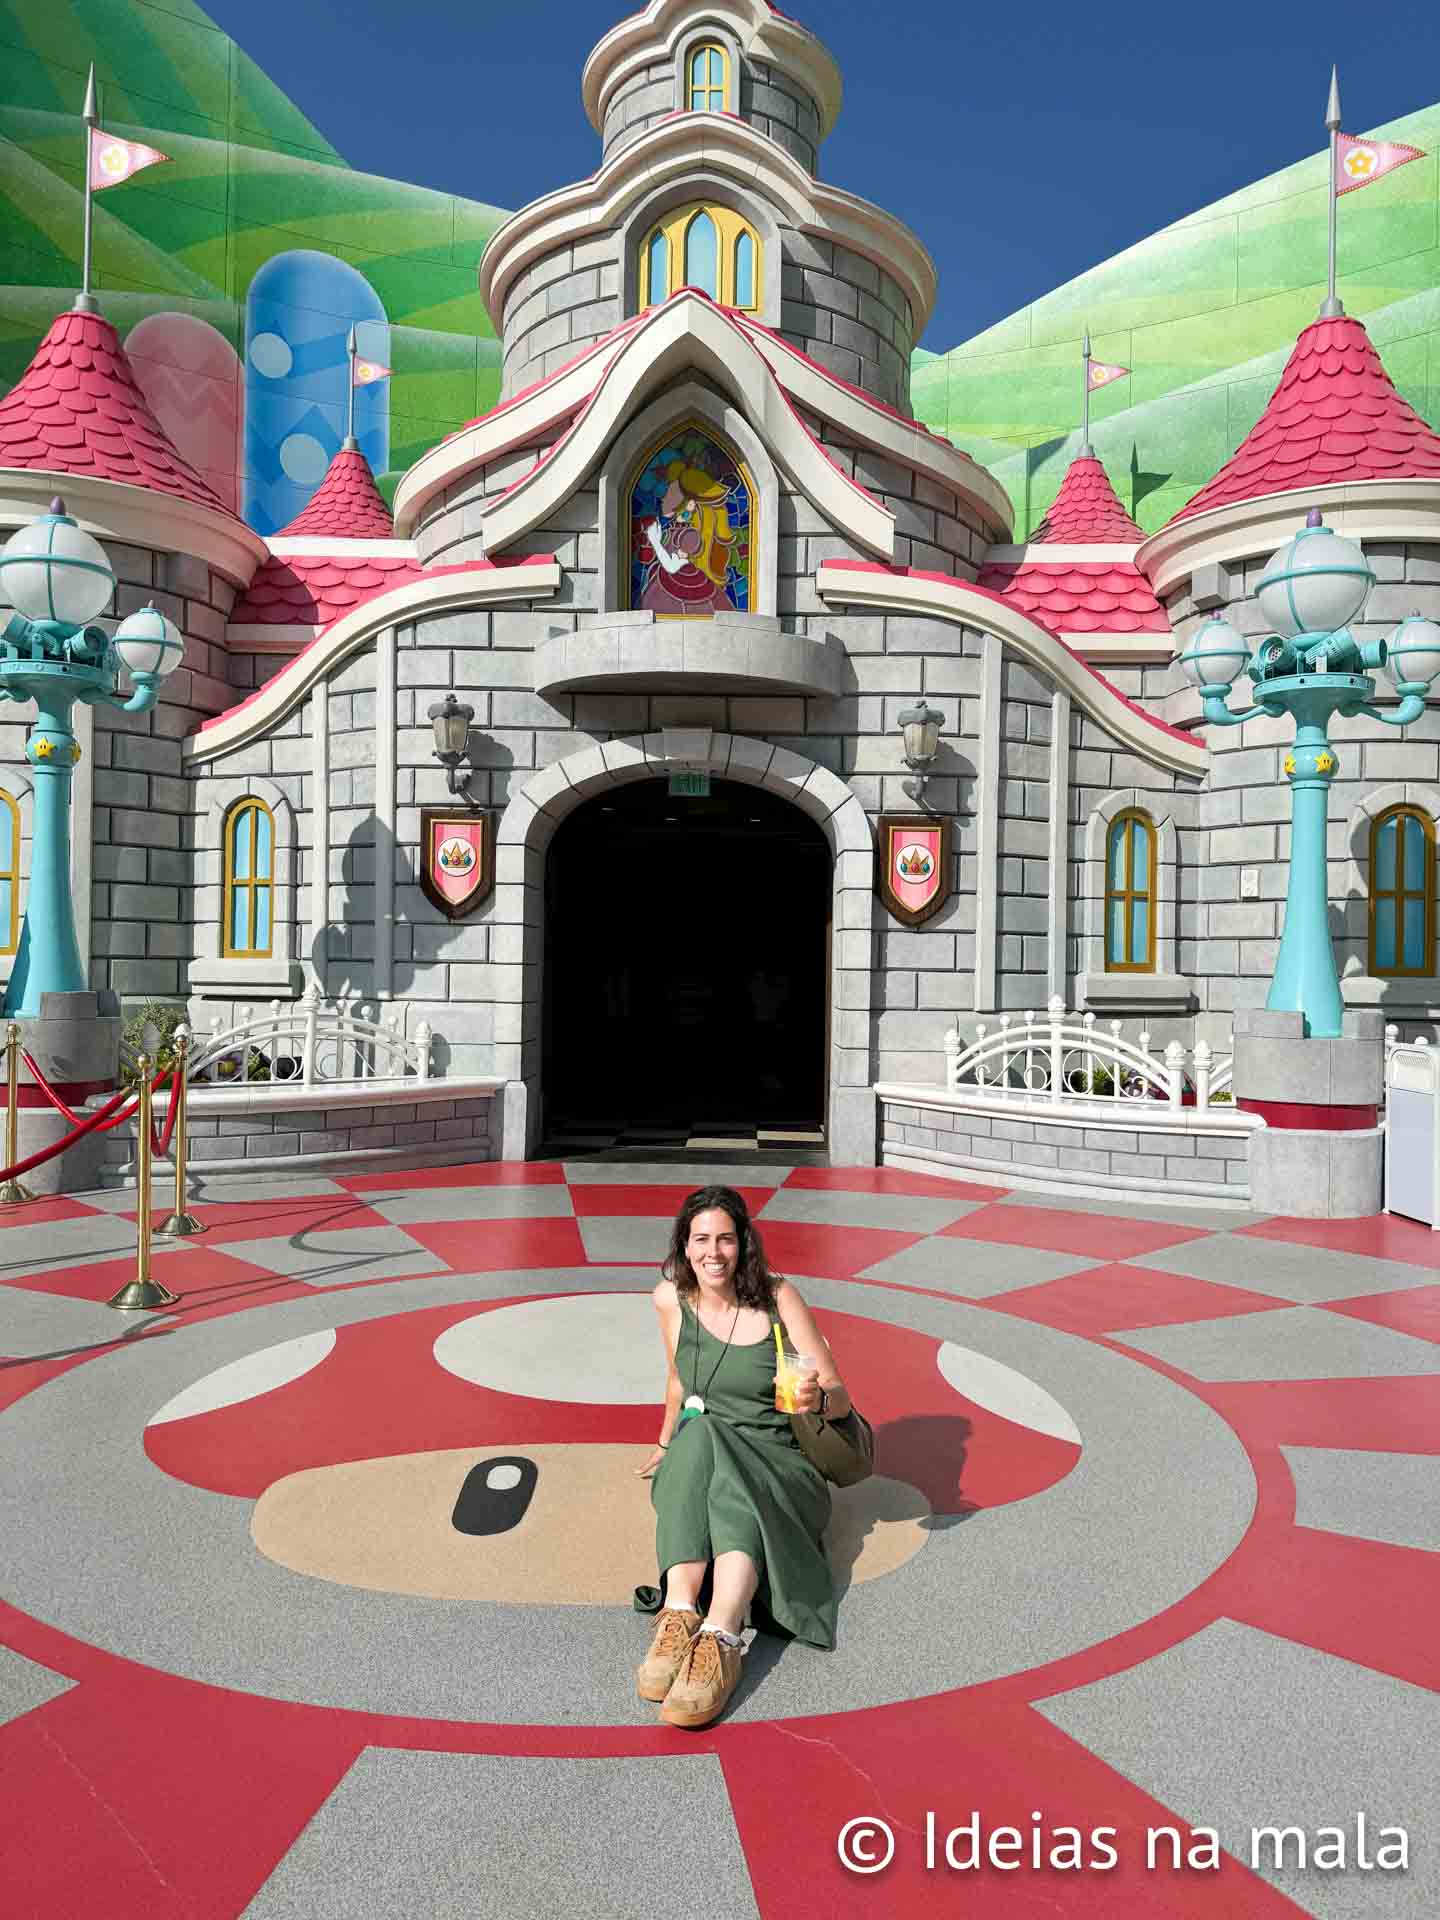 Castelo da Princesa Peach é a entrada da área